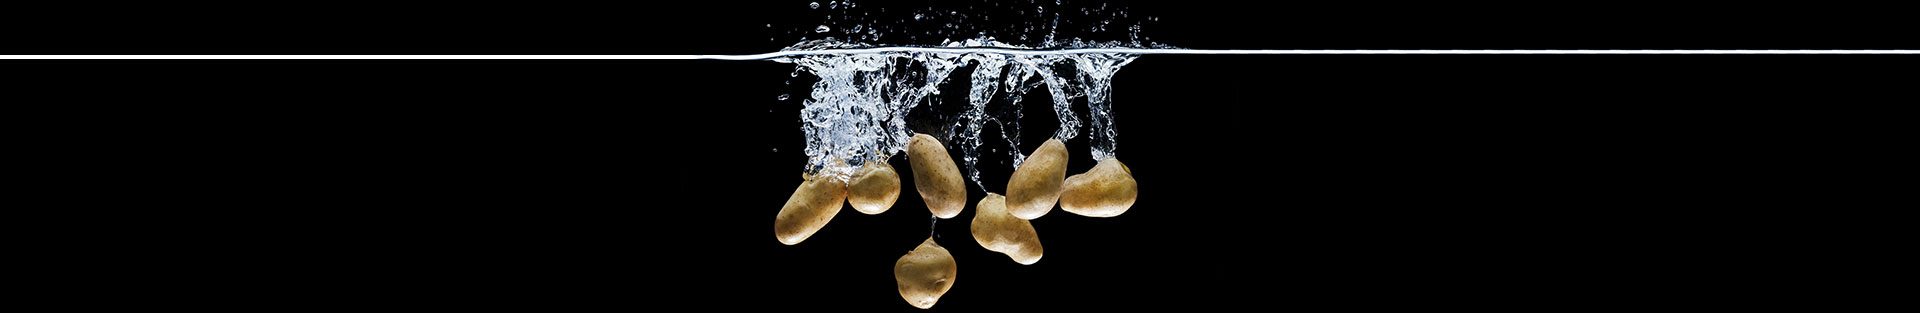 potatoes-drops-in-water-subheader